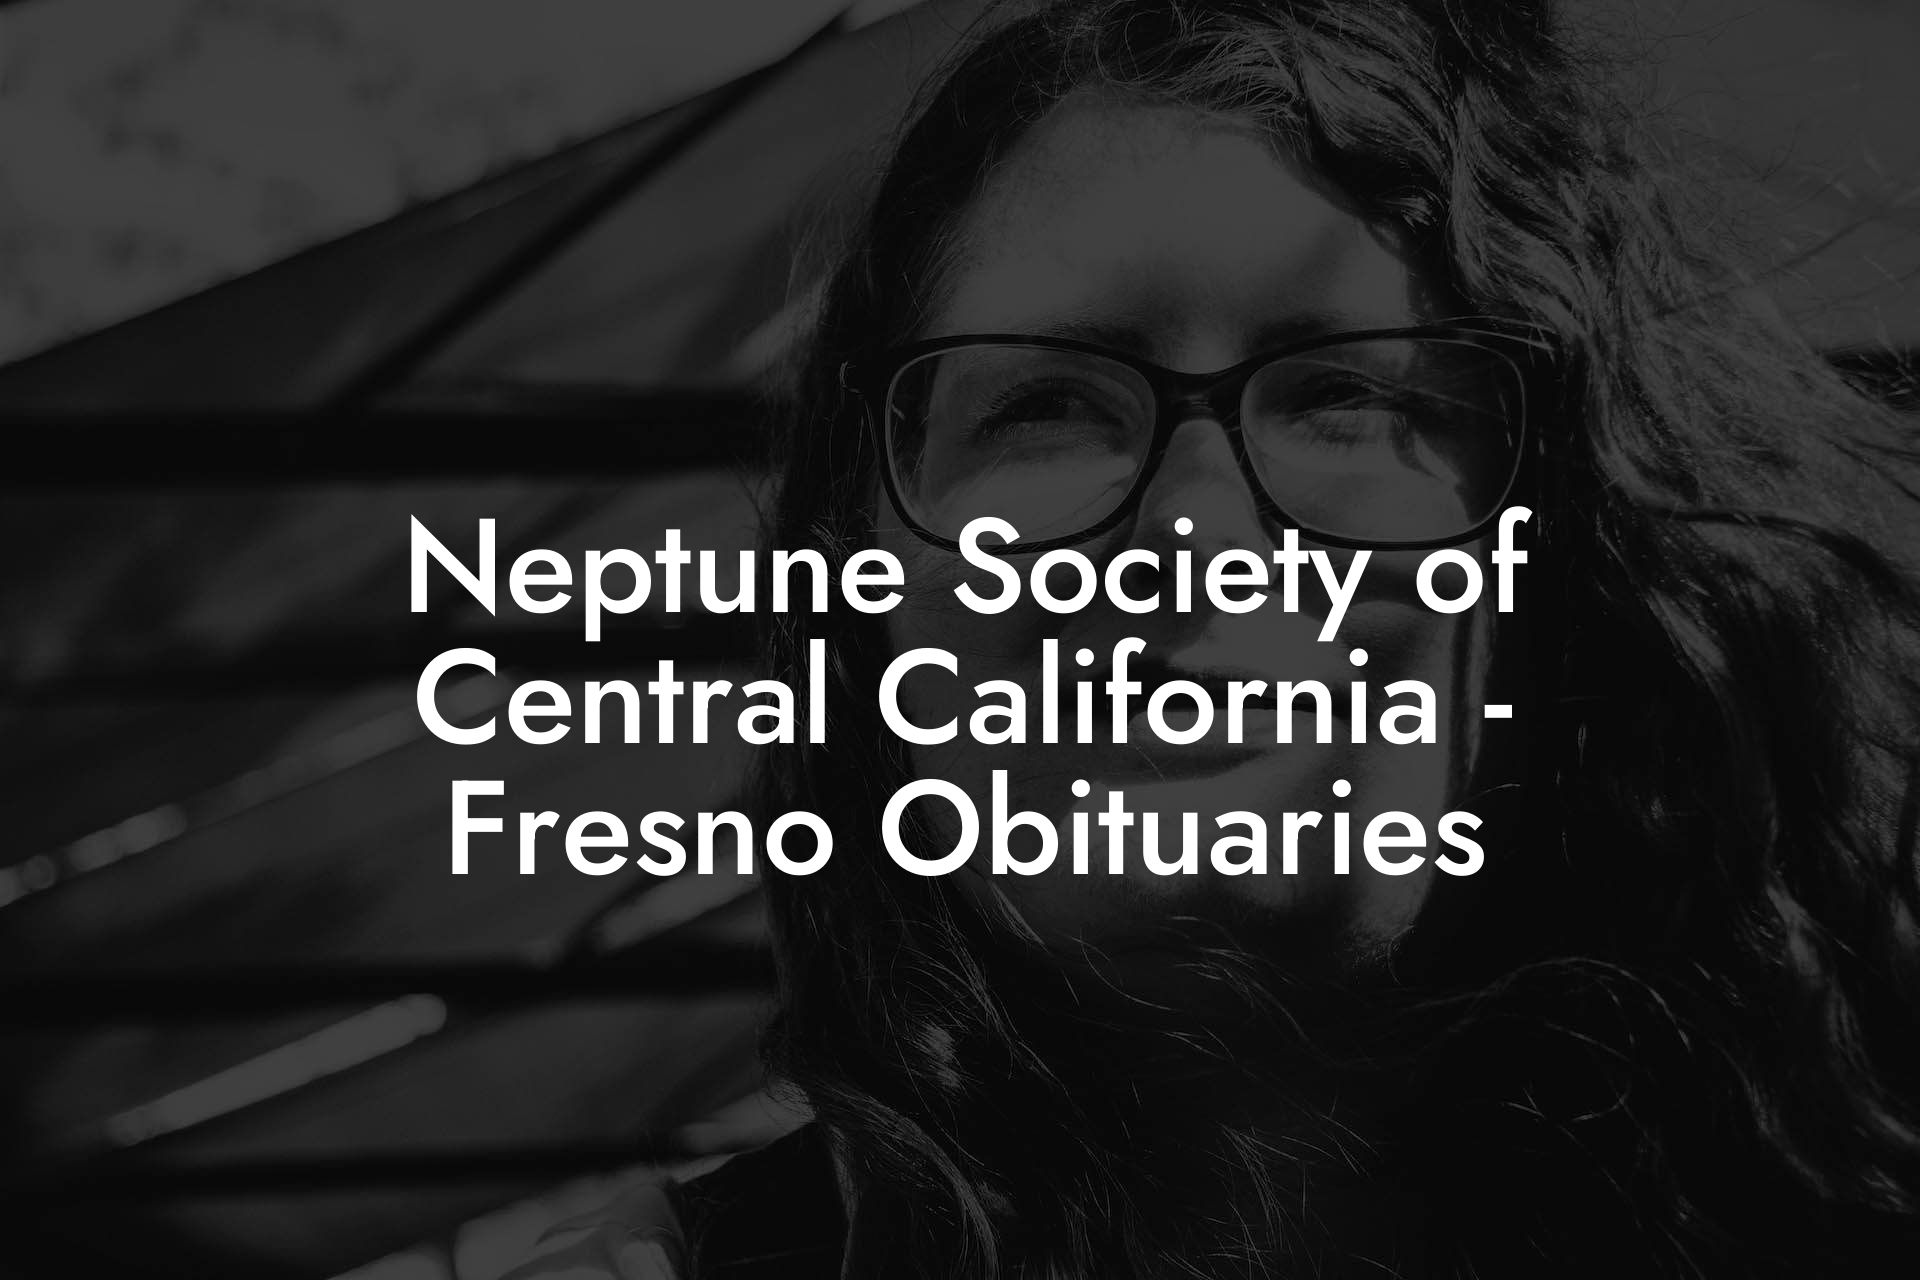 Neptune Society of Central California - Fresno Obituaries